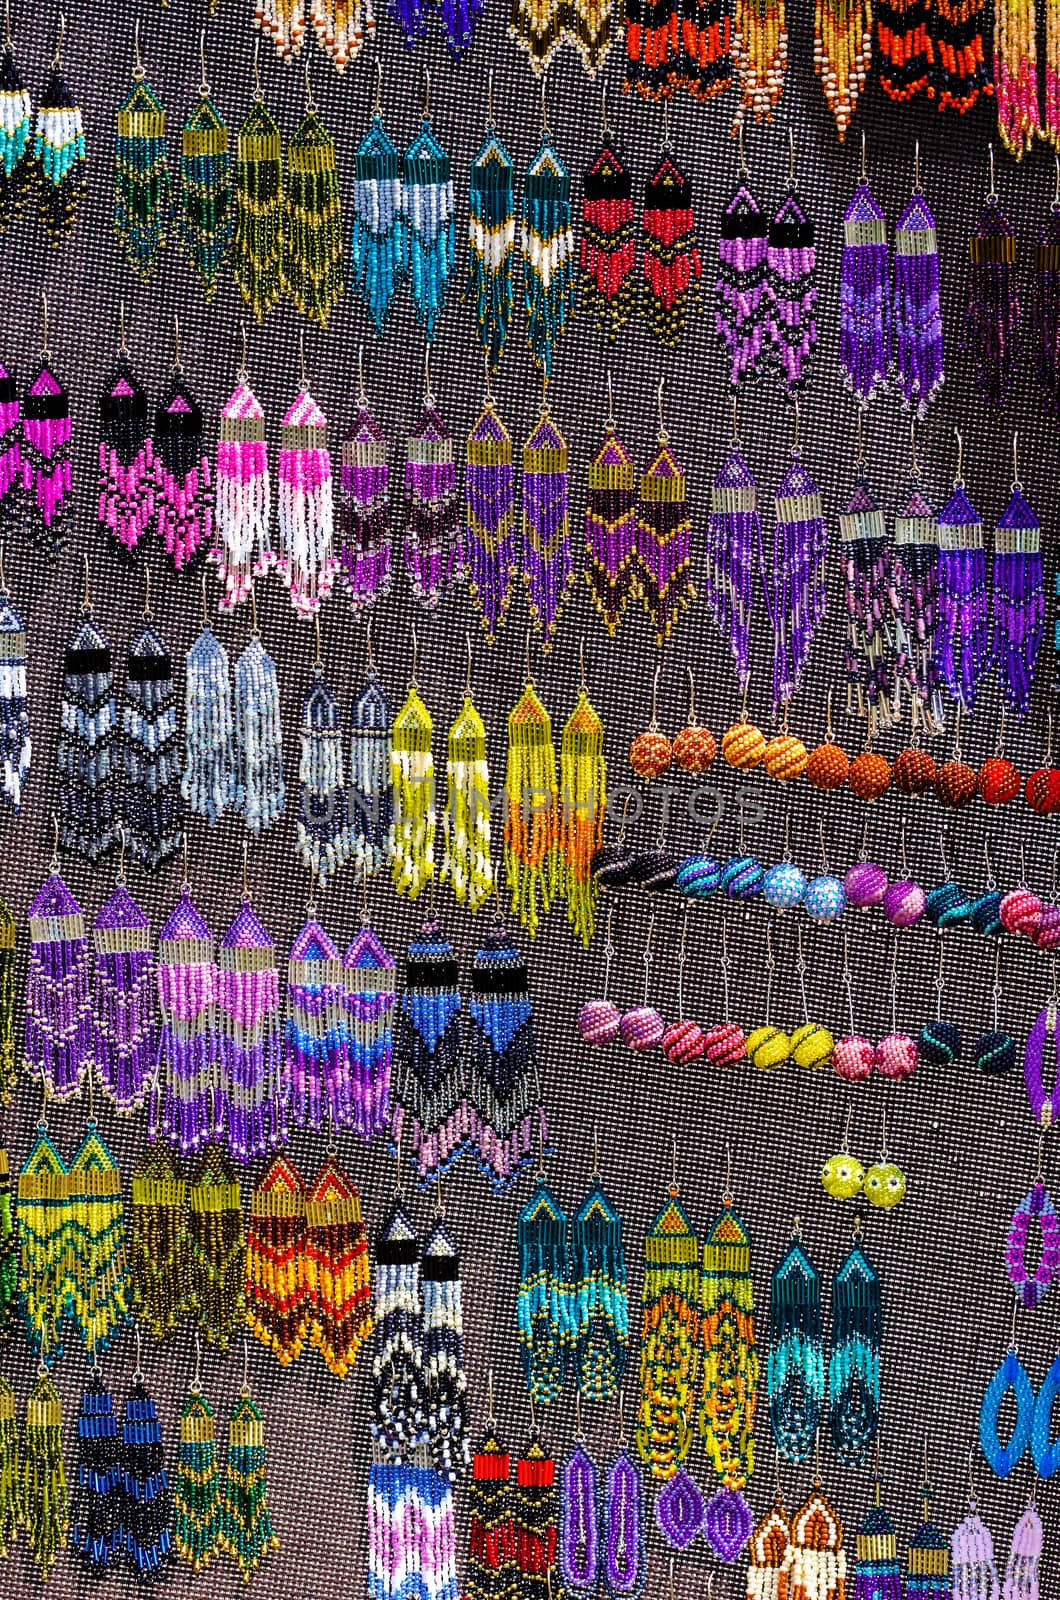 Colourful handmade earrings on a market stall